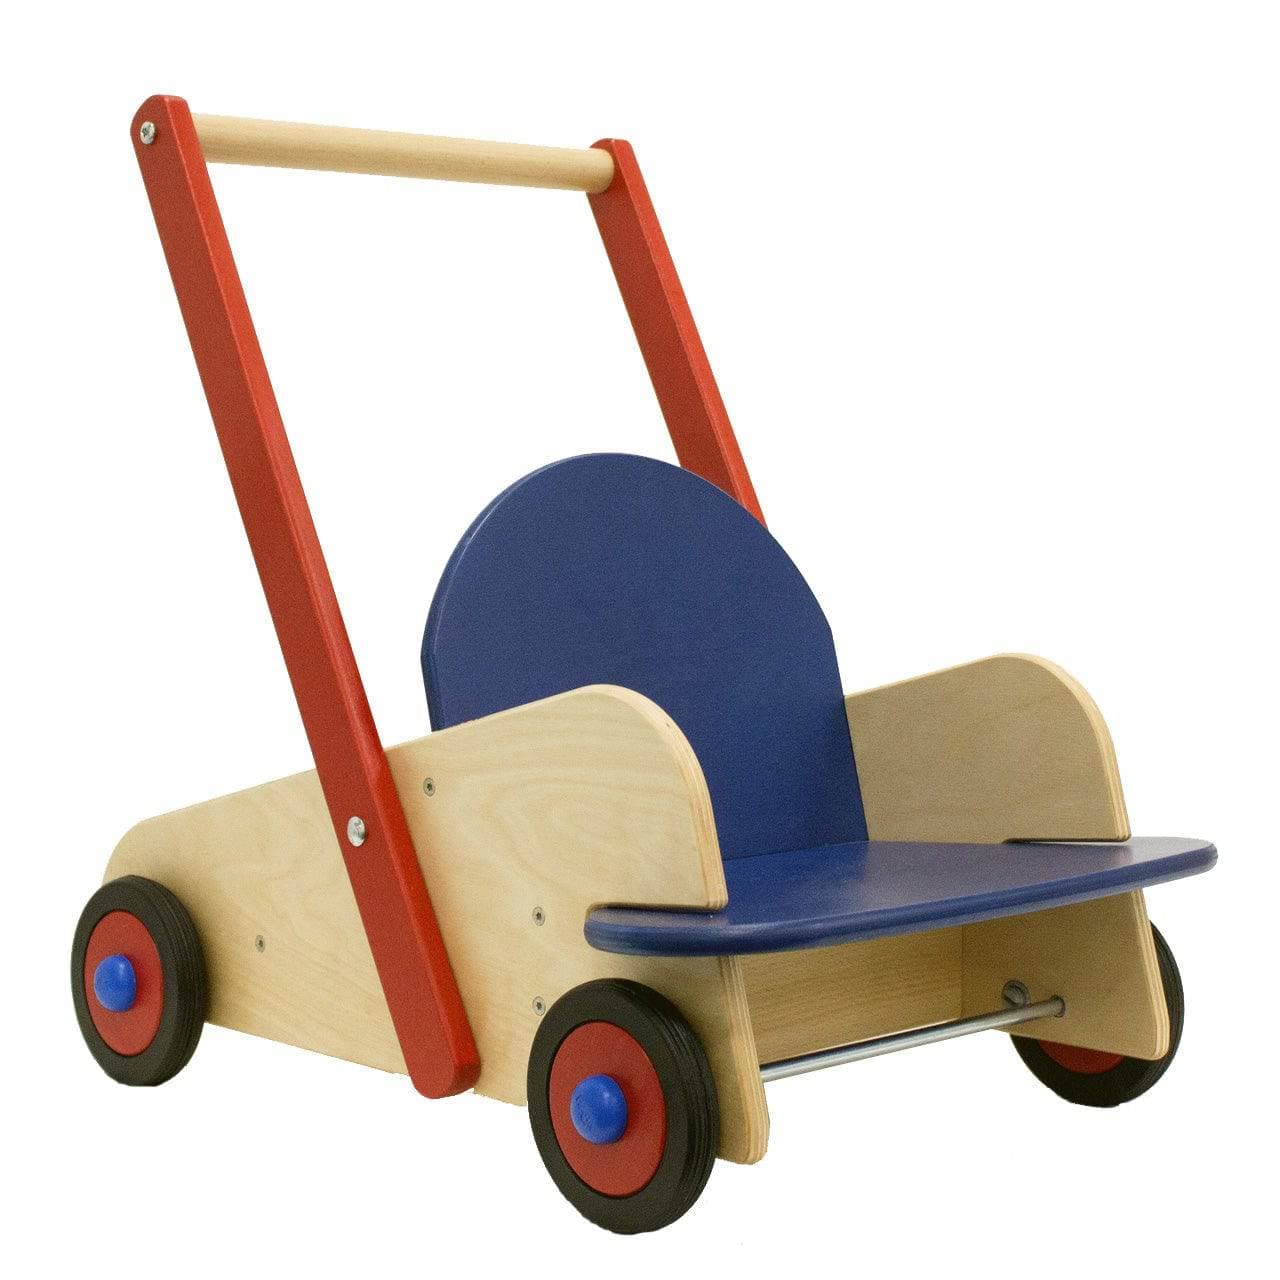 Walker Wagon Push Toy by Haba